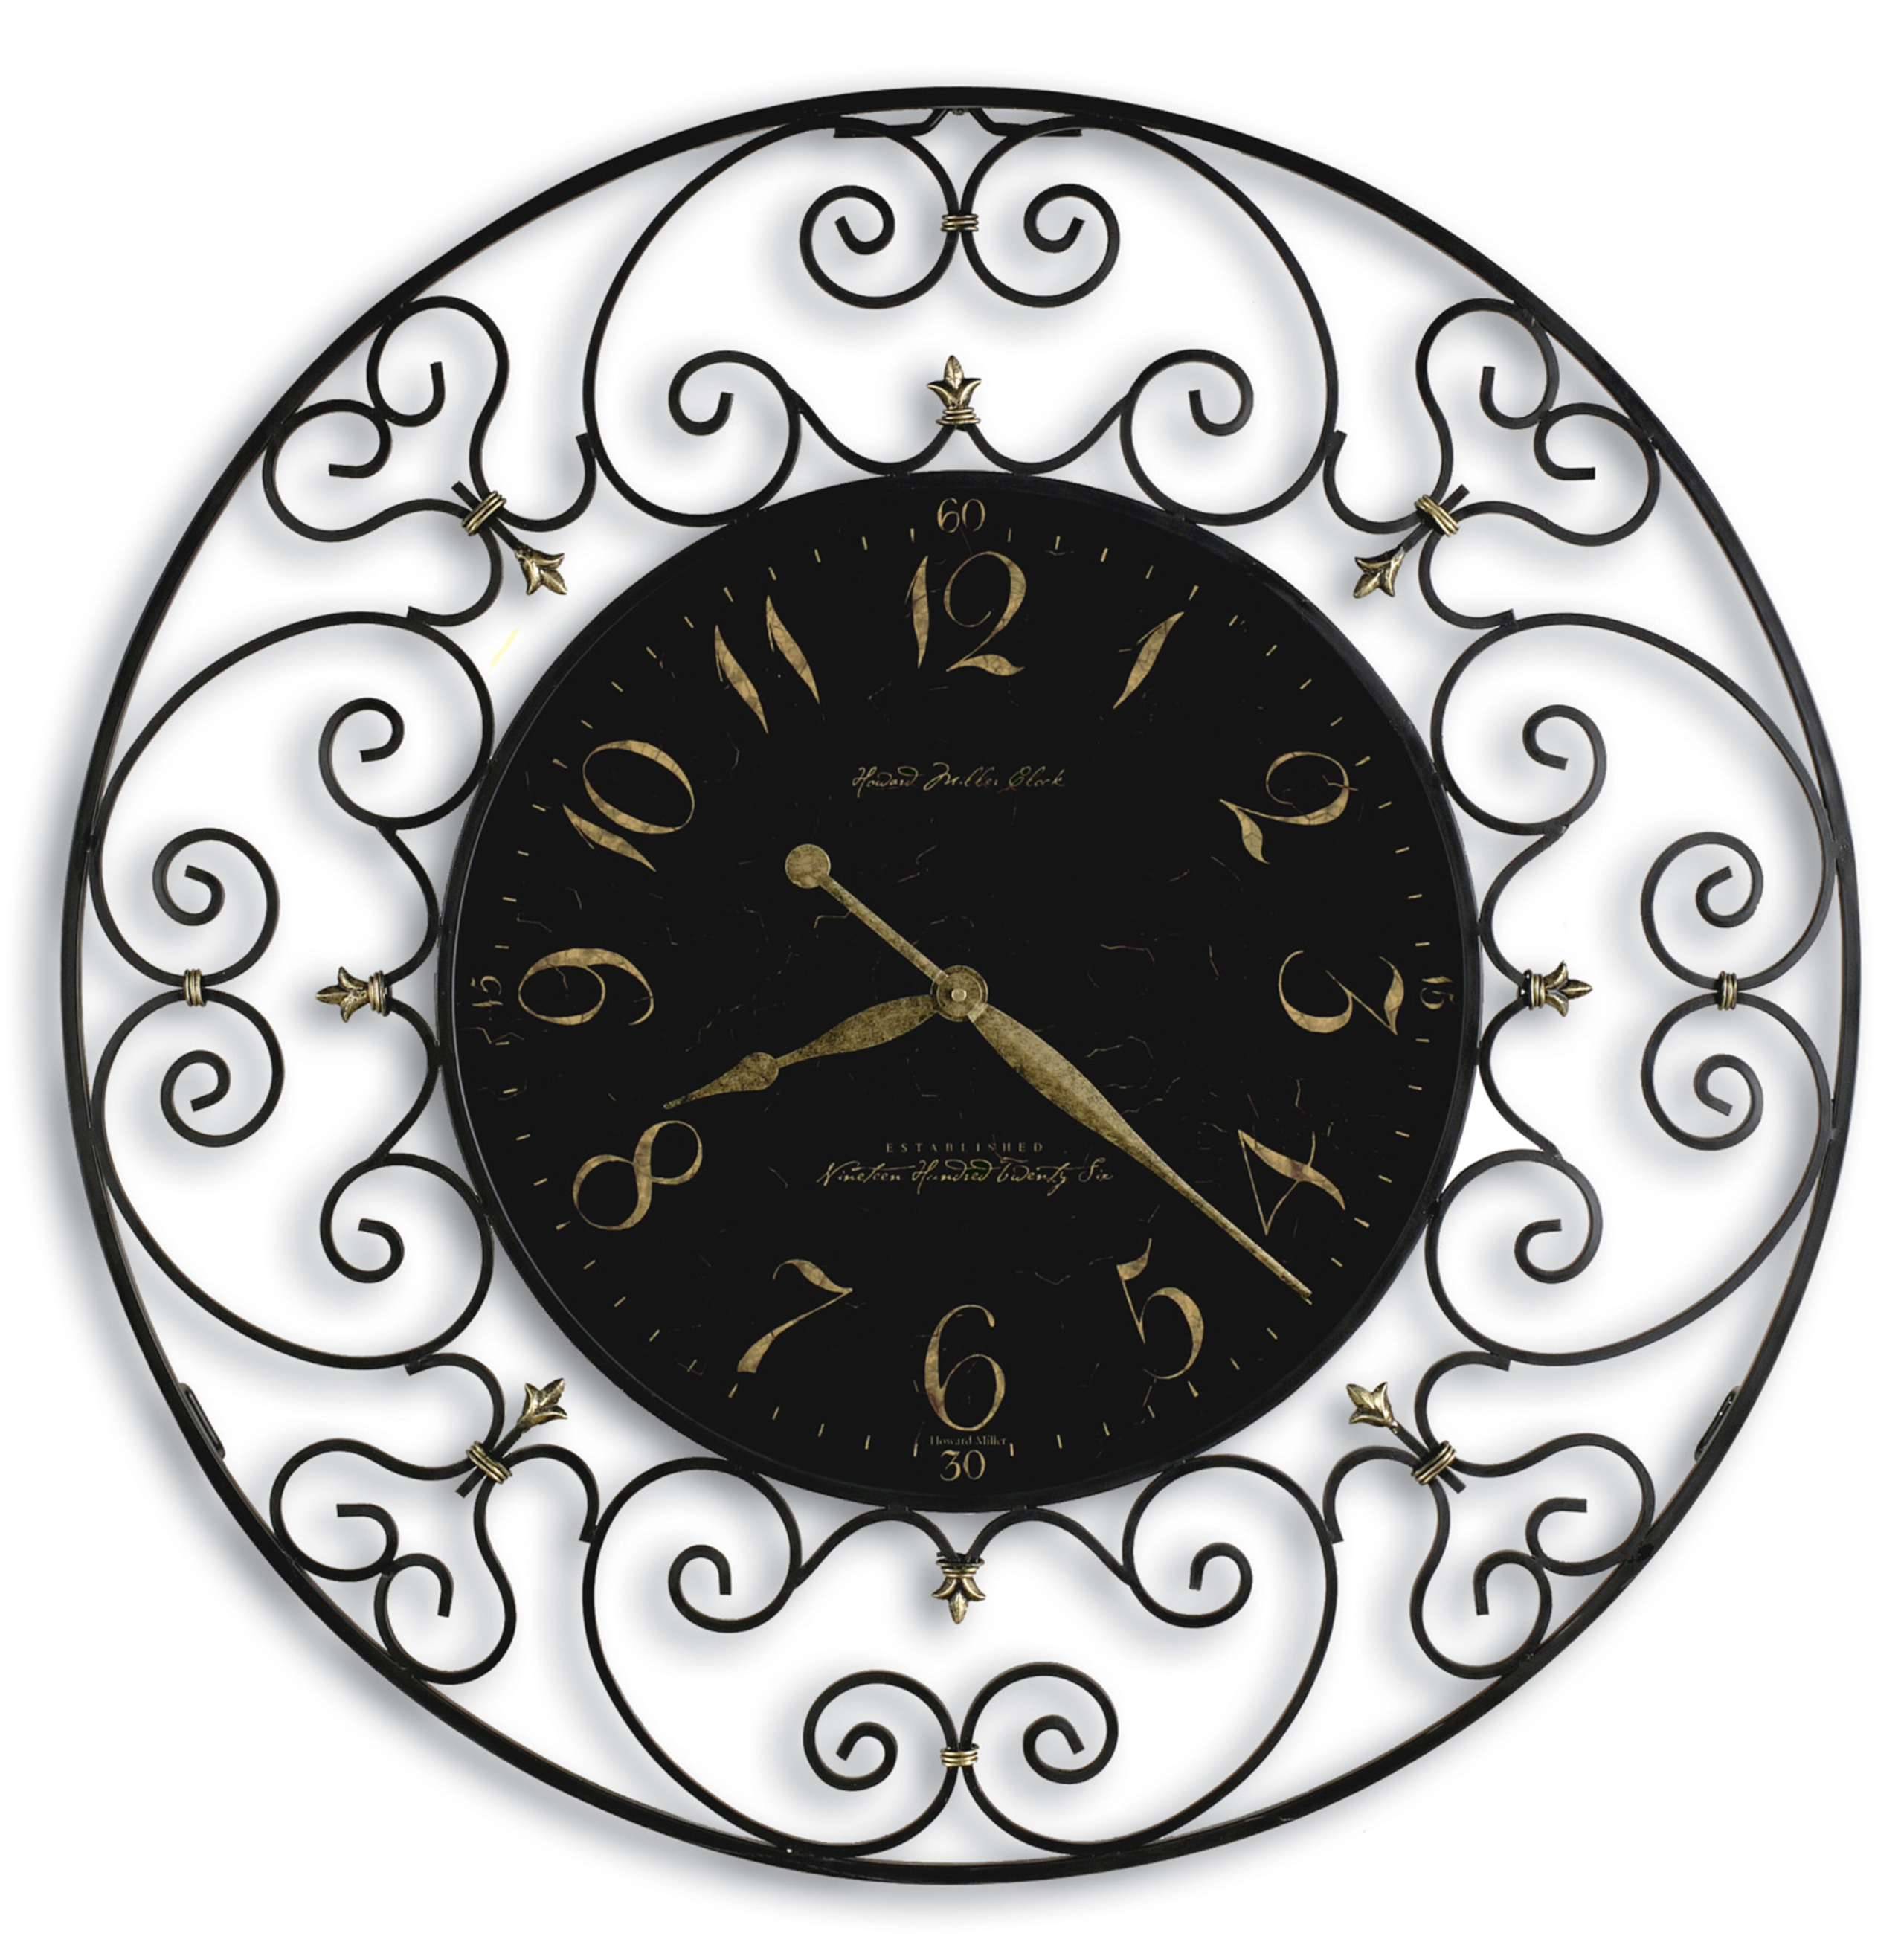 This impressive 36 diameter black iron wall clock features decorative